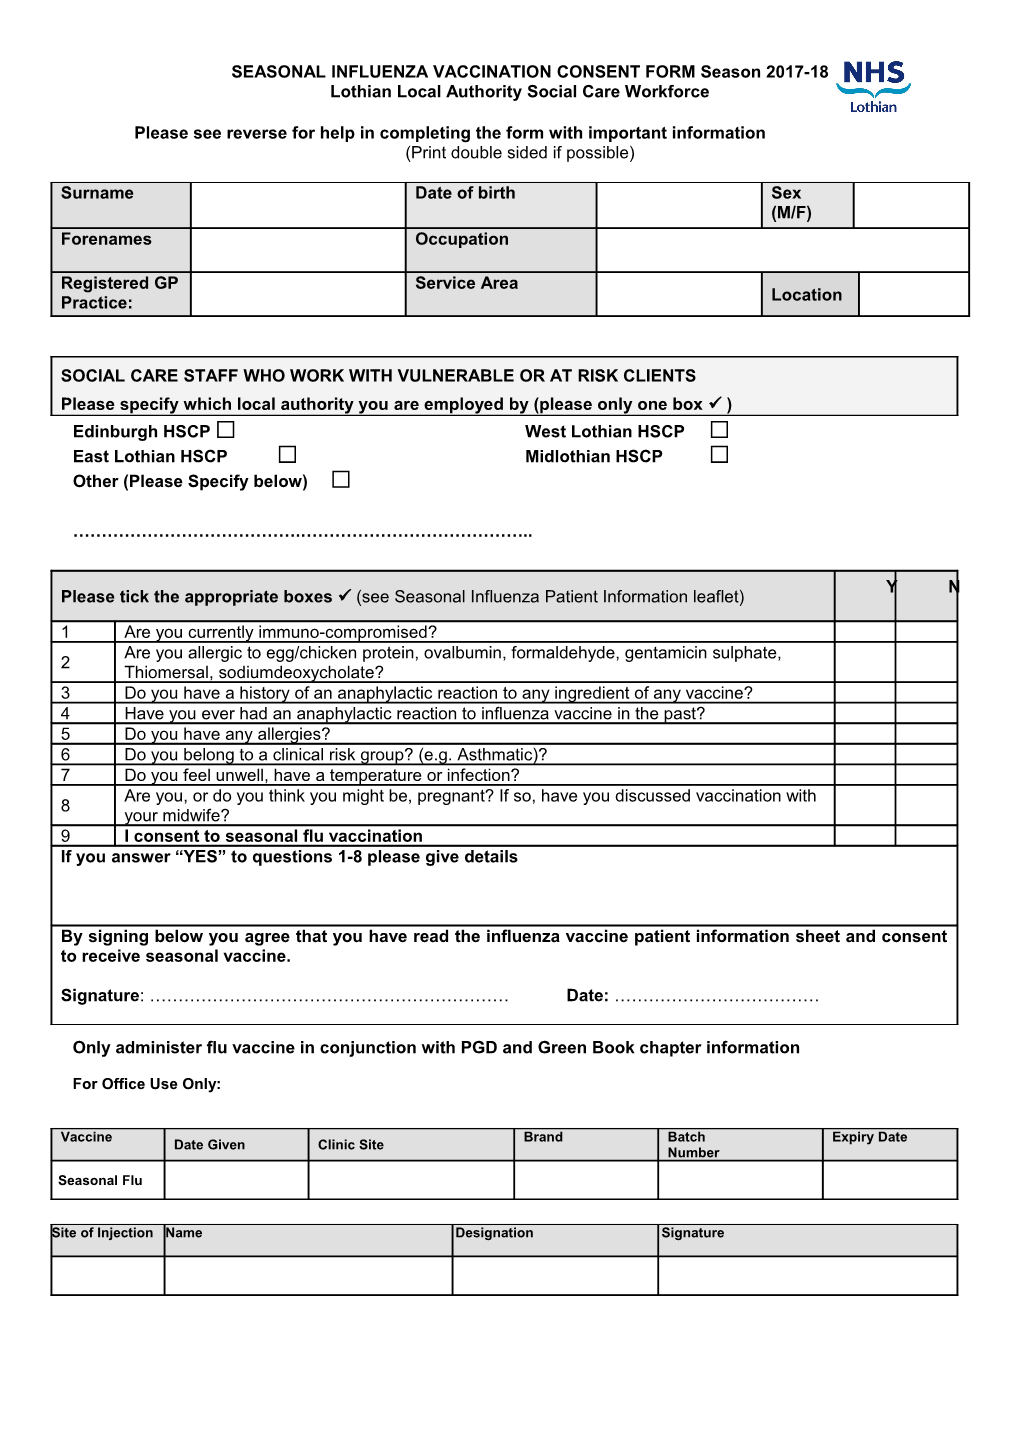 Council (Social Care) Staff Flu Vacc Consent Form 2013-14 (Final 2)